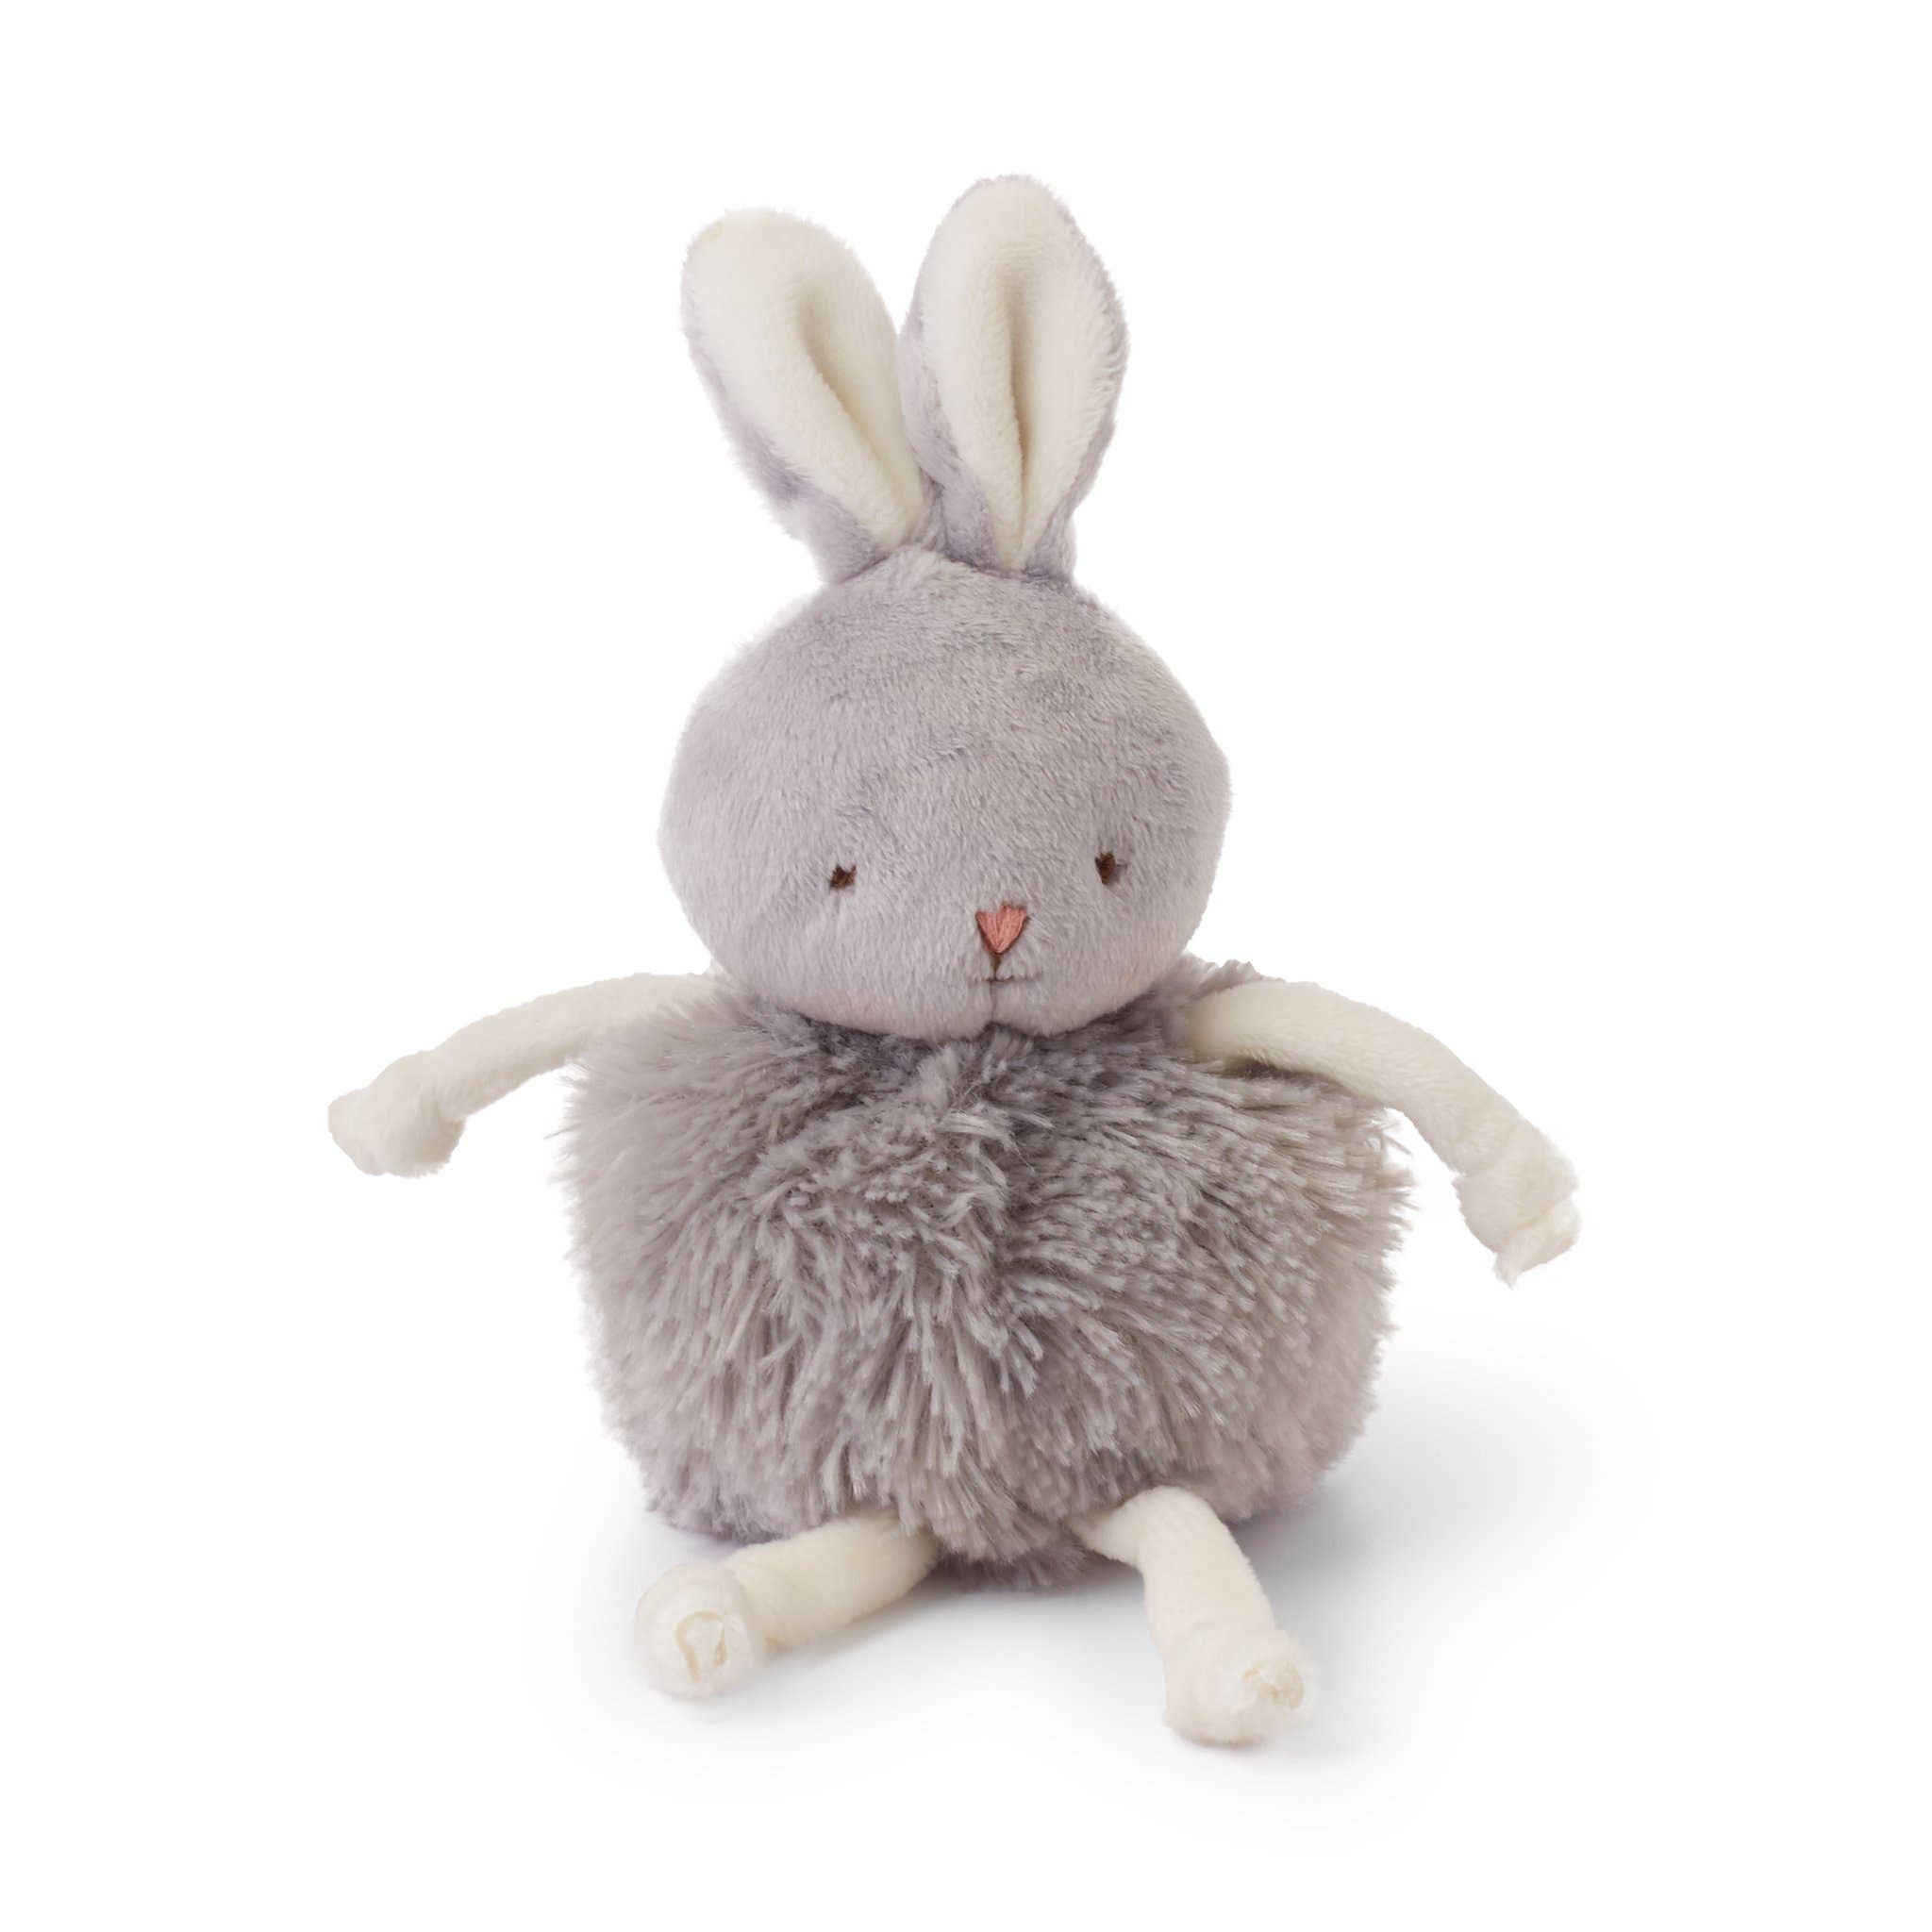 Stuffed Animal Plush, Bloom Roly Poly Bunny